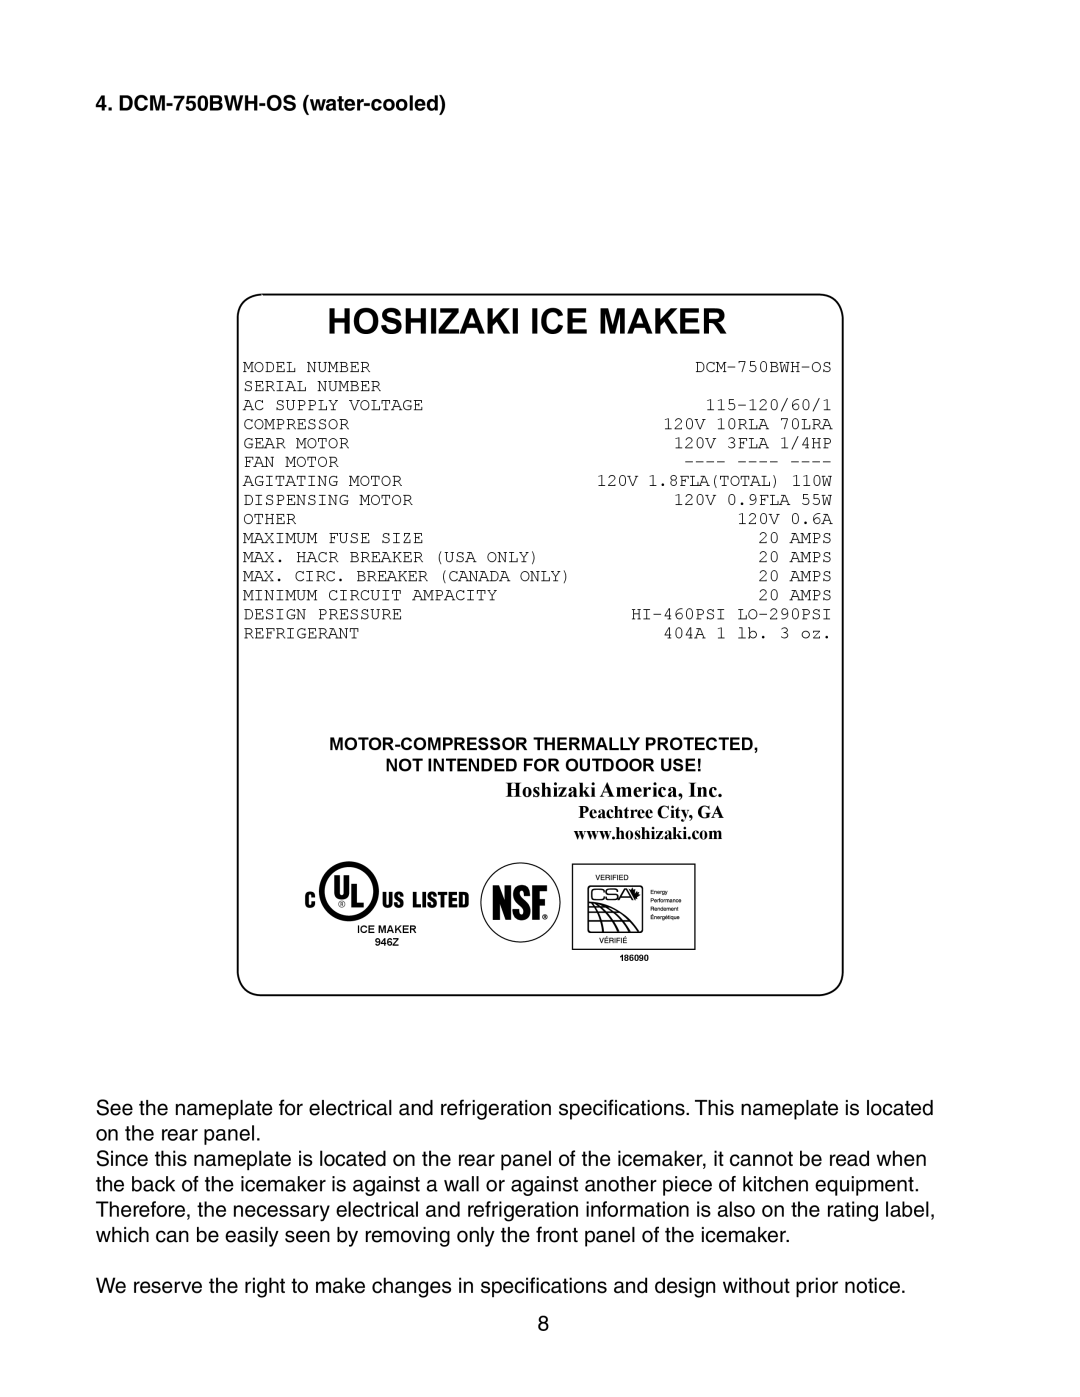 Hoshizaki DCM-750BWH(-OS), DCM-750BAH(-OS) Hoshizaki Ice Maker, DCM-750BWH-OS water-cooled, Hoshizaki America, Inc 